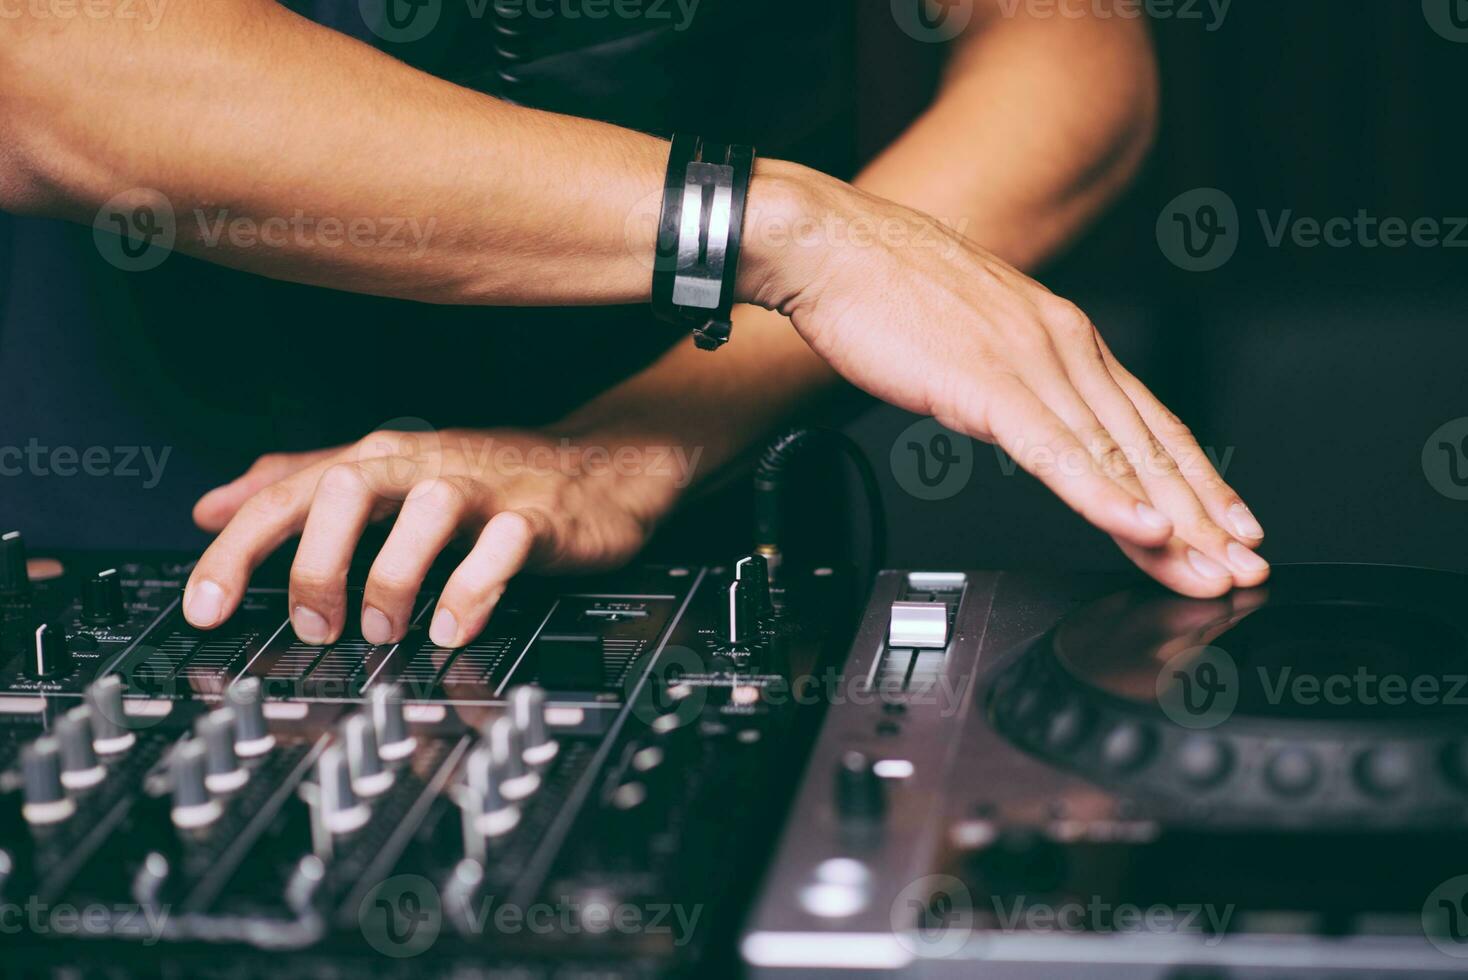 DJ's hands control the remote control close-up photo